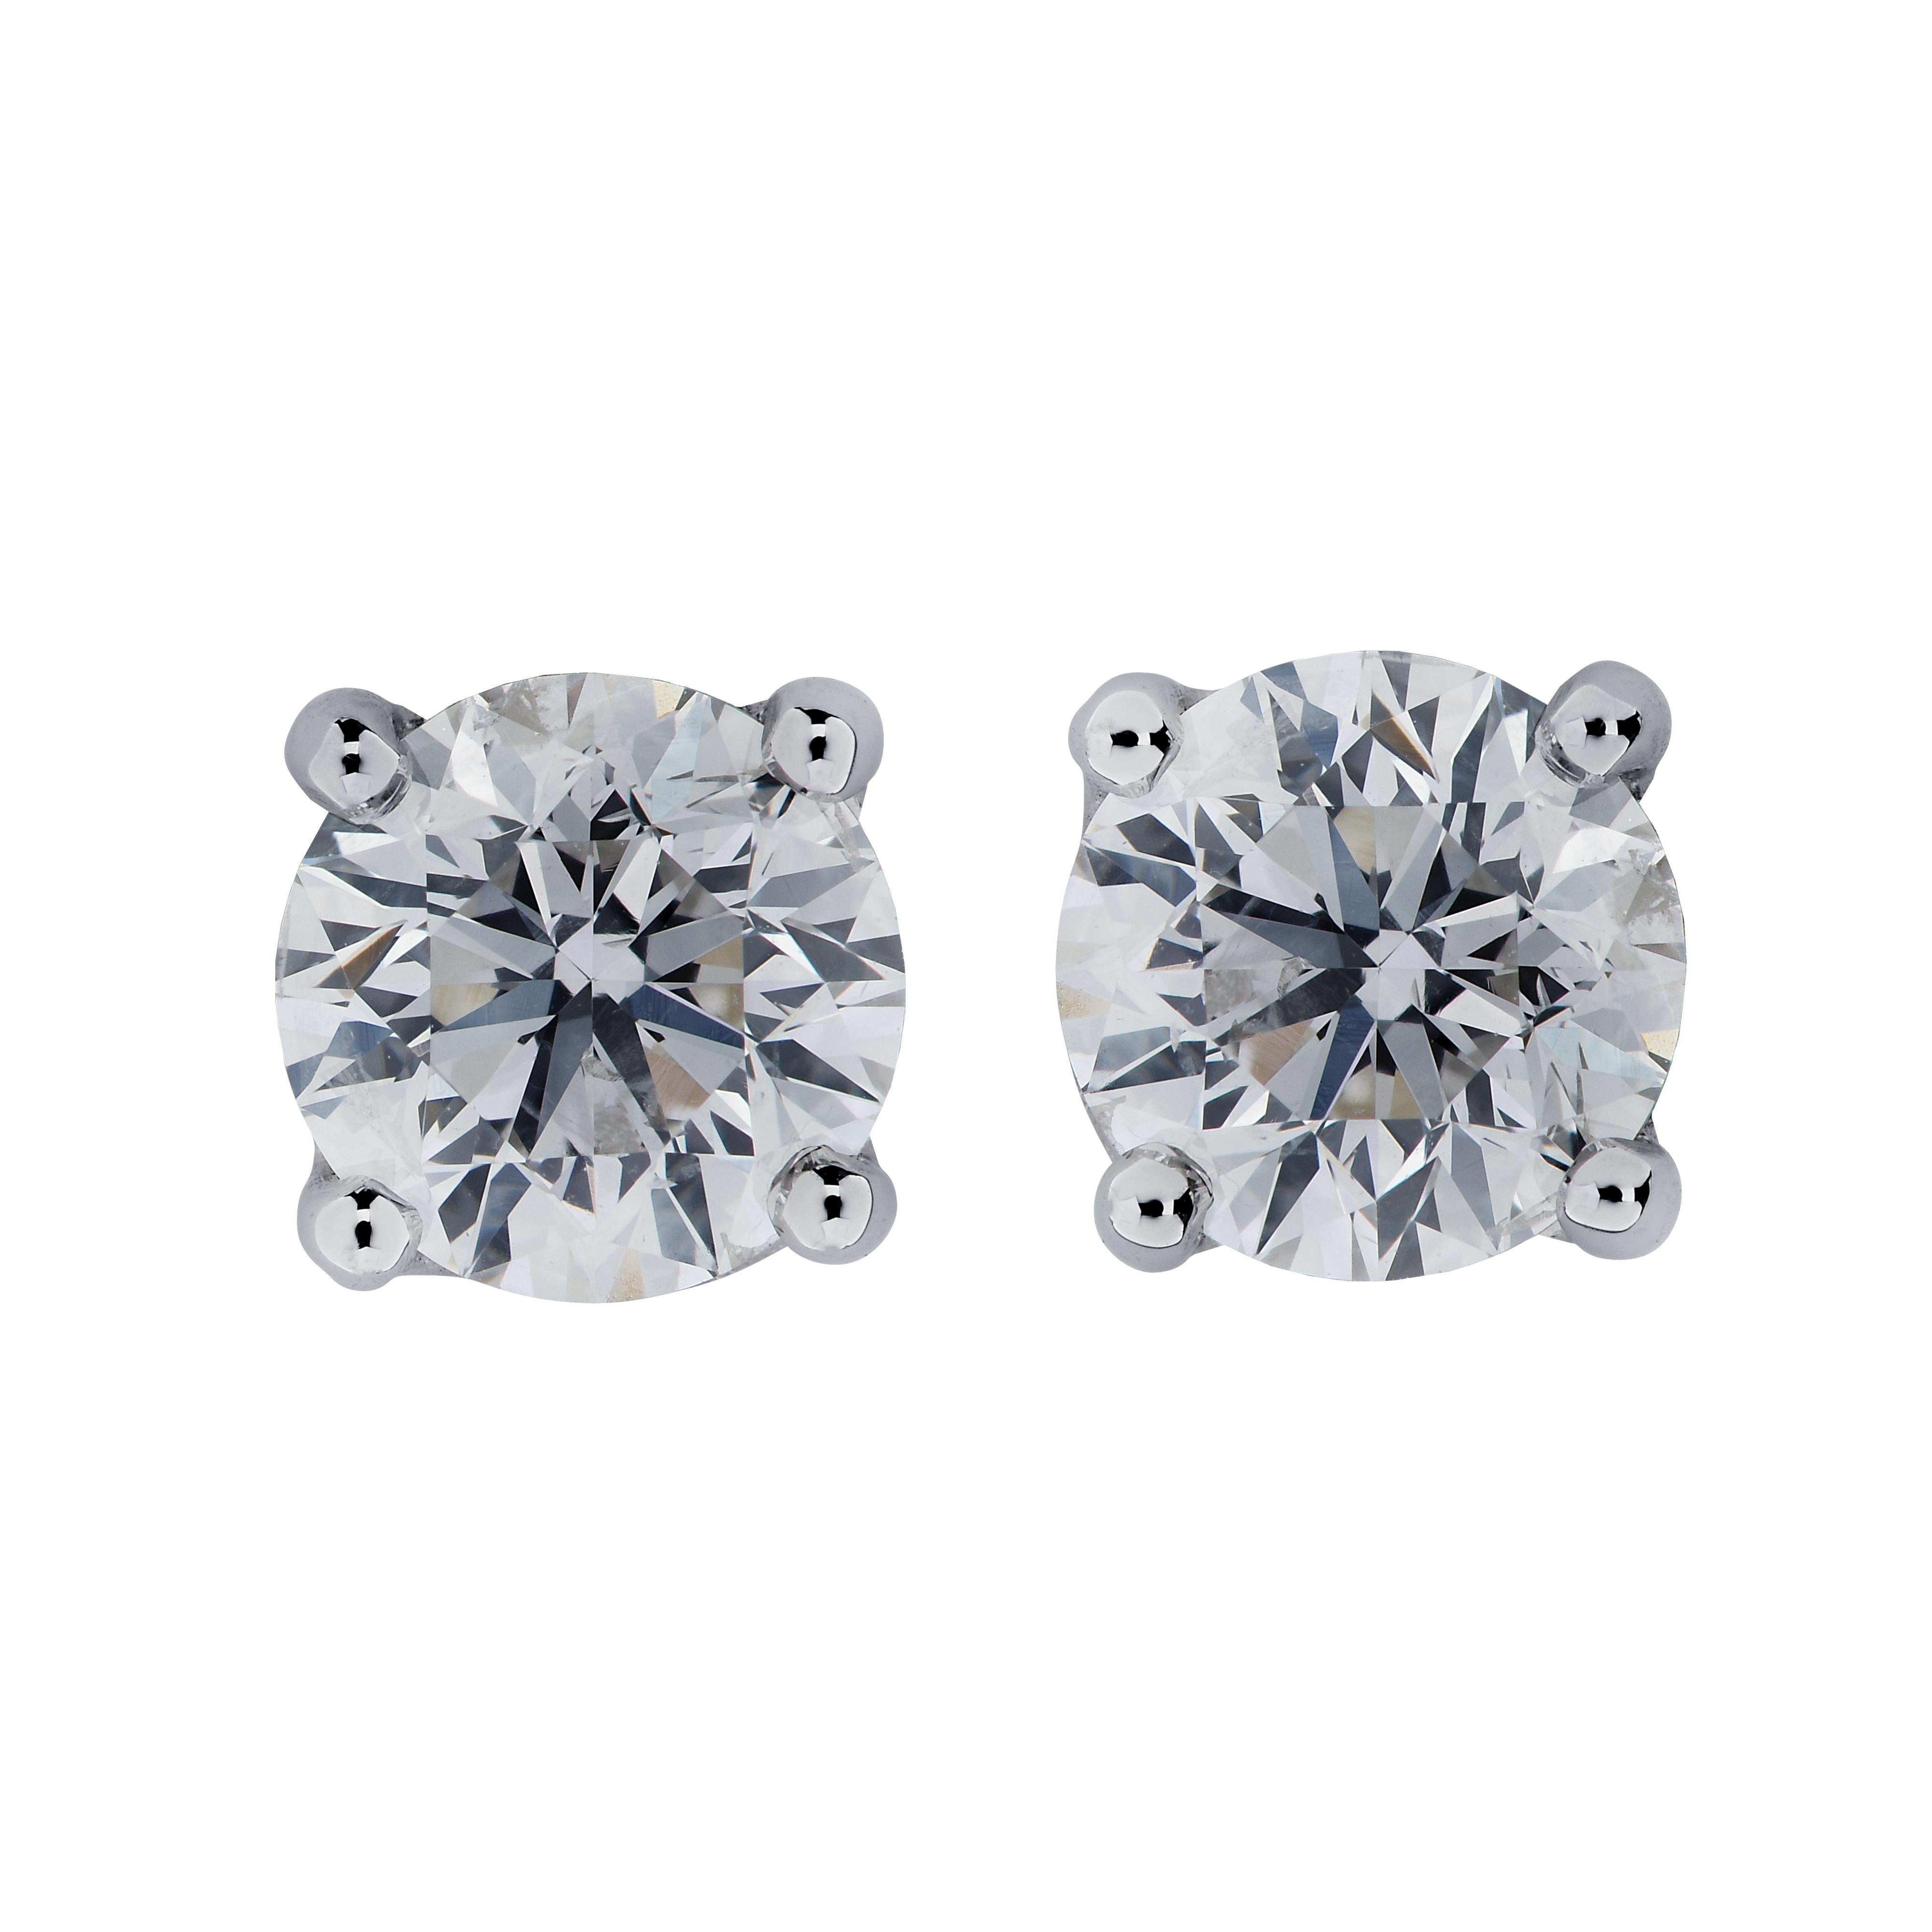 Round Cut Vivid Diamonds 1.46 Carat Diamond Stud Earrings